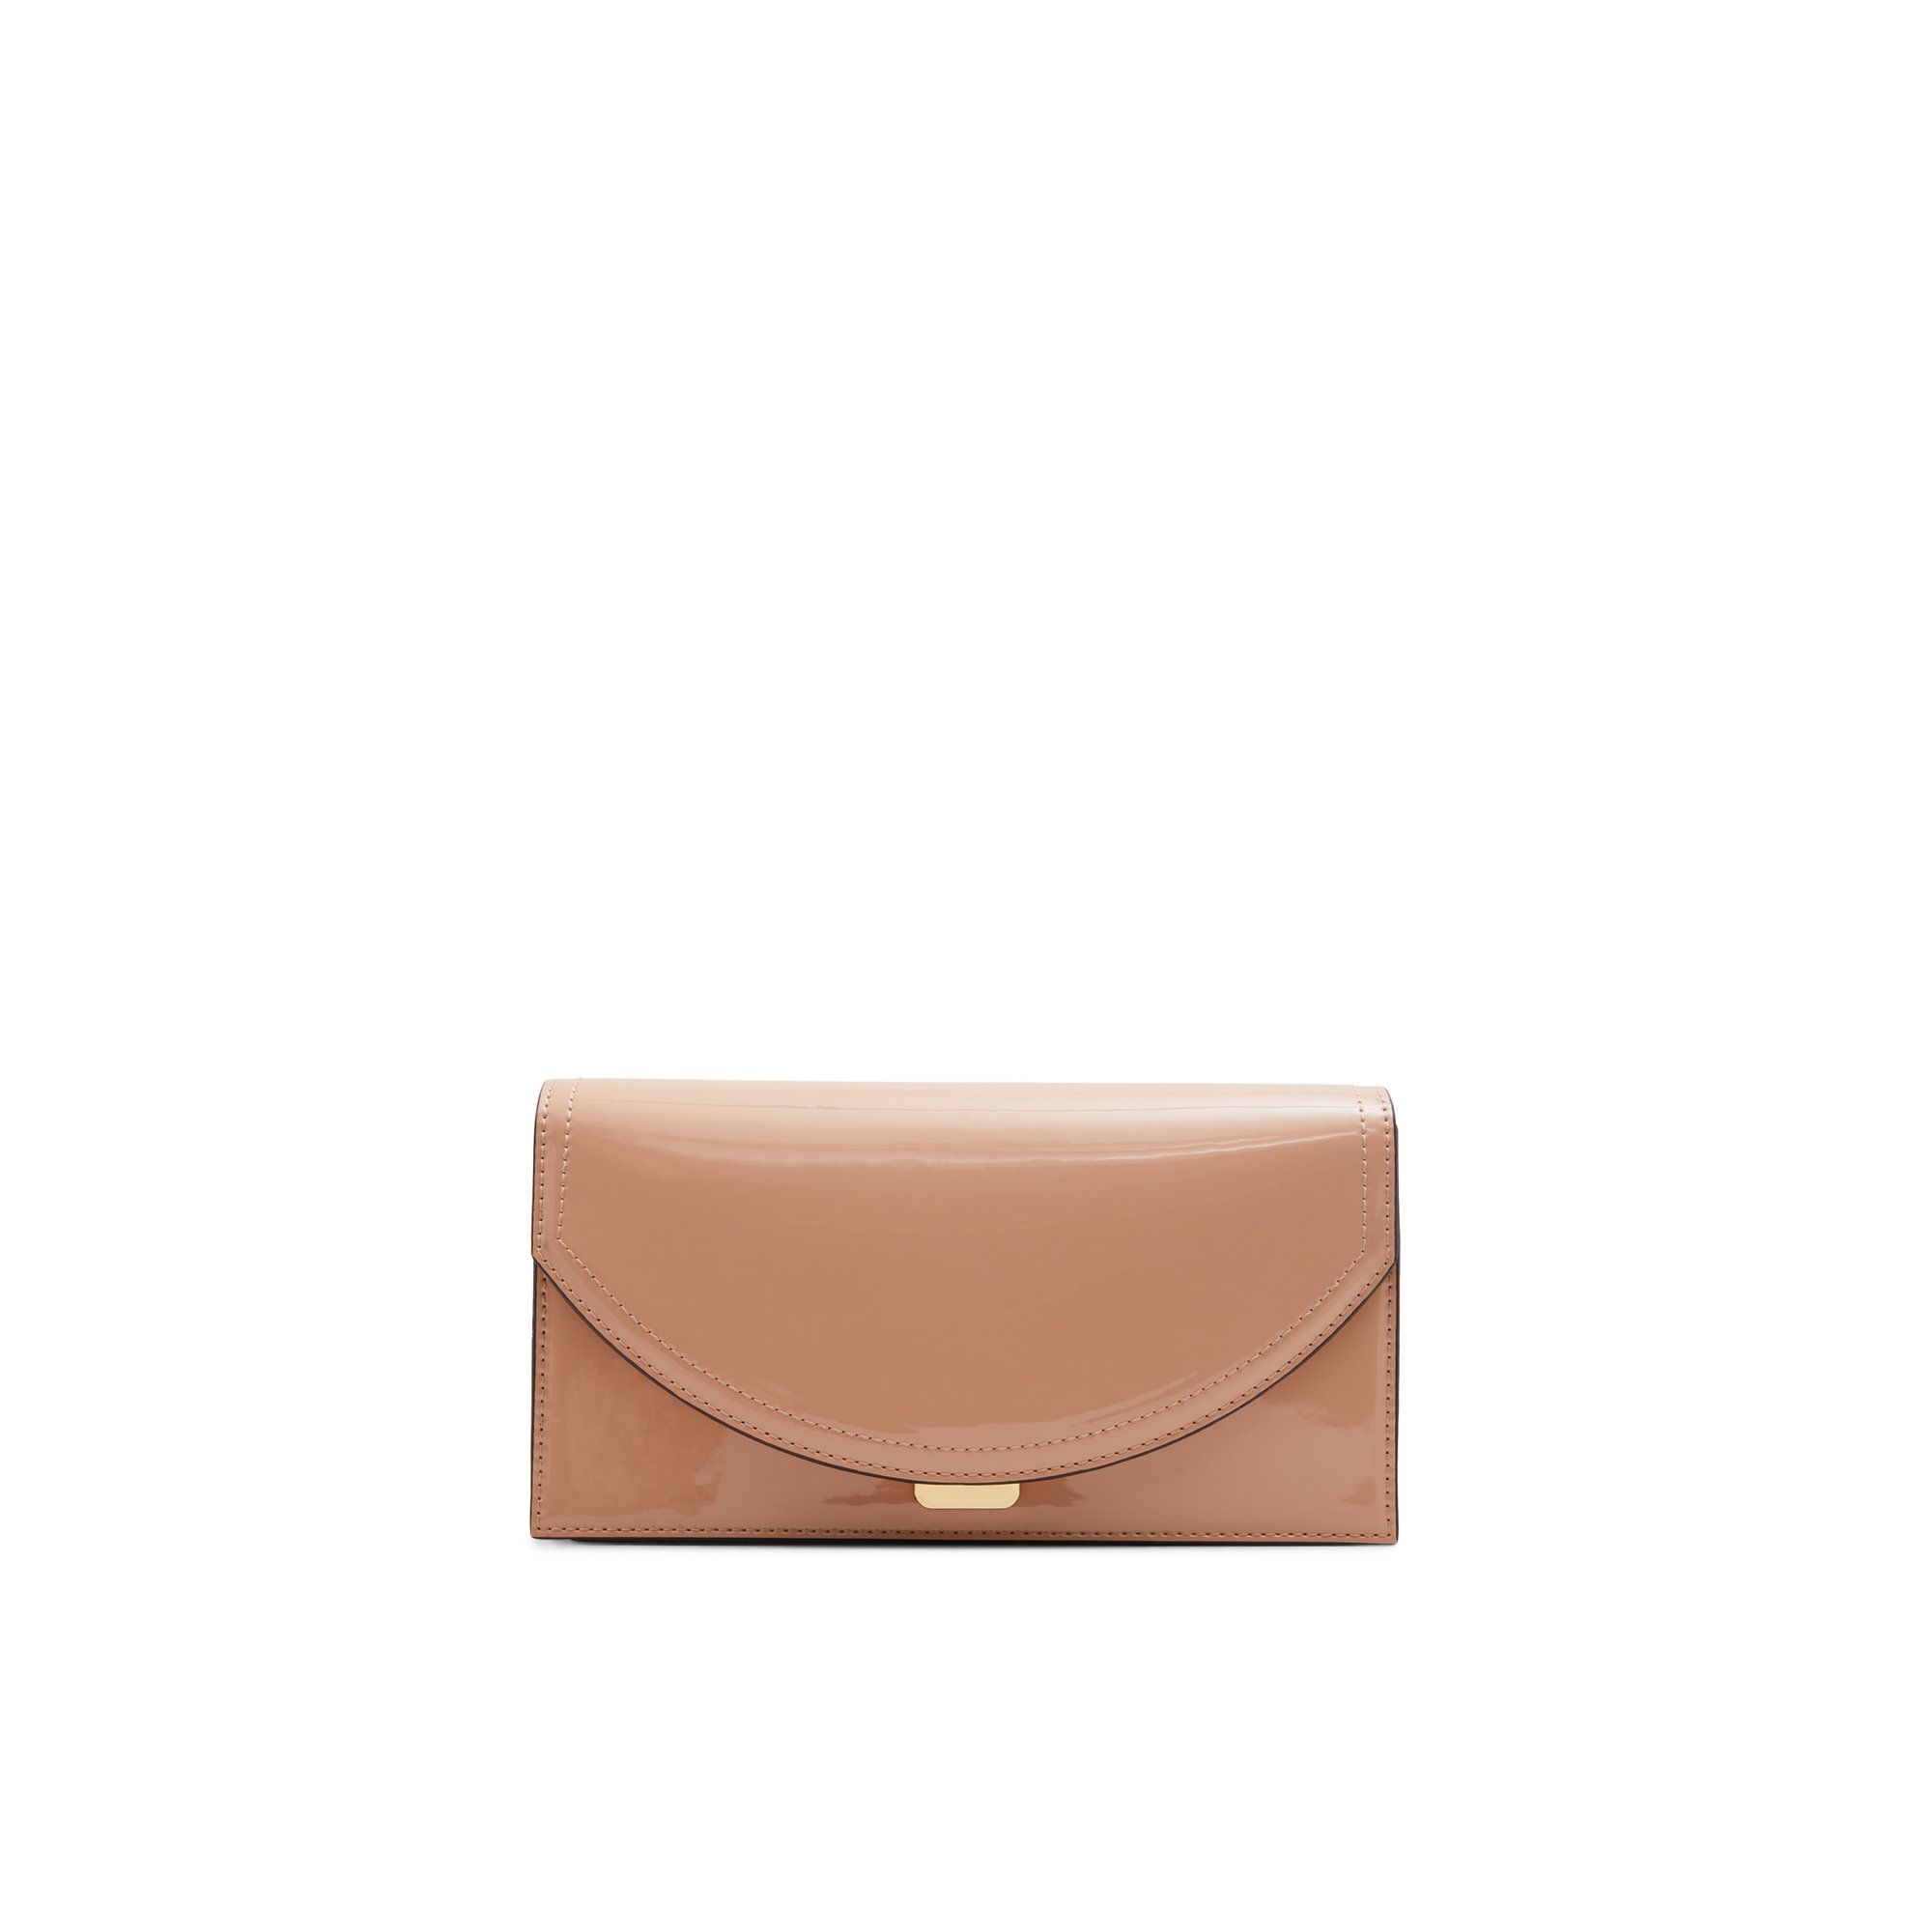 ALDO Kalonnx - Women's Handbags Clutches & Evening Bags - Beige